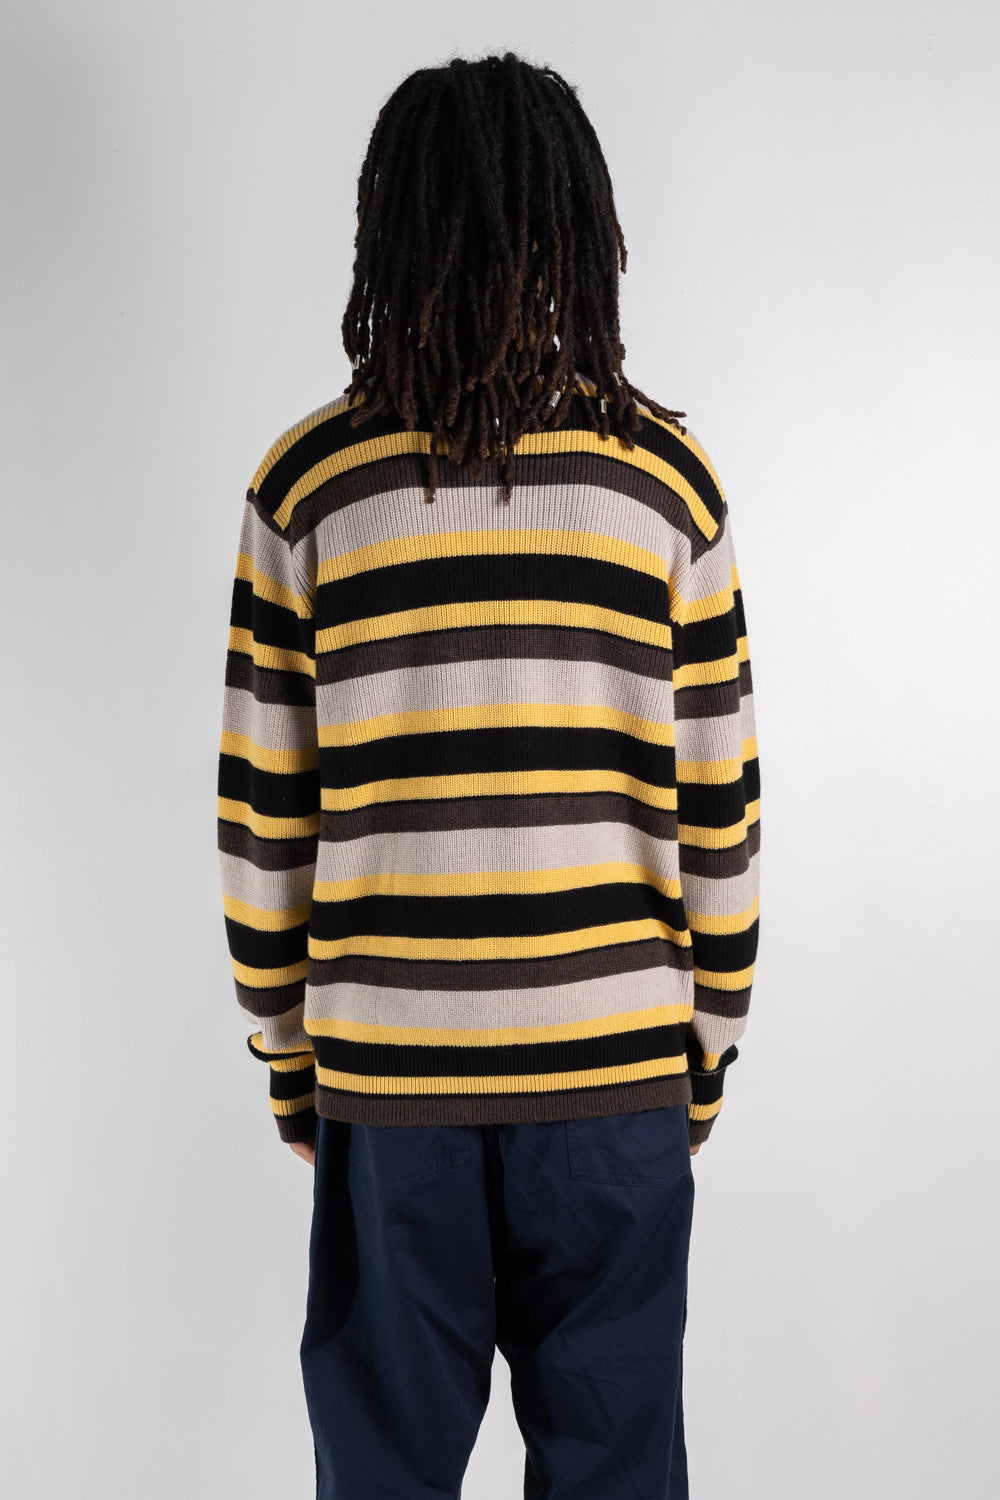 Mens Fashion Knits | Etudes Boris Patch Striped| The Standard Store